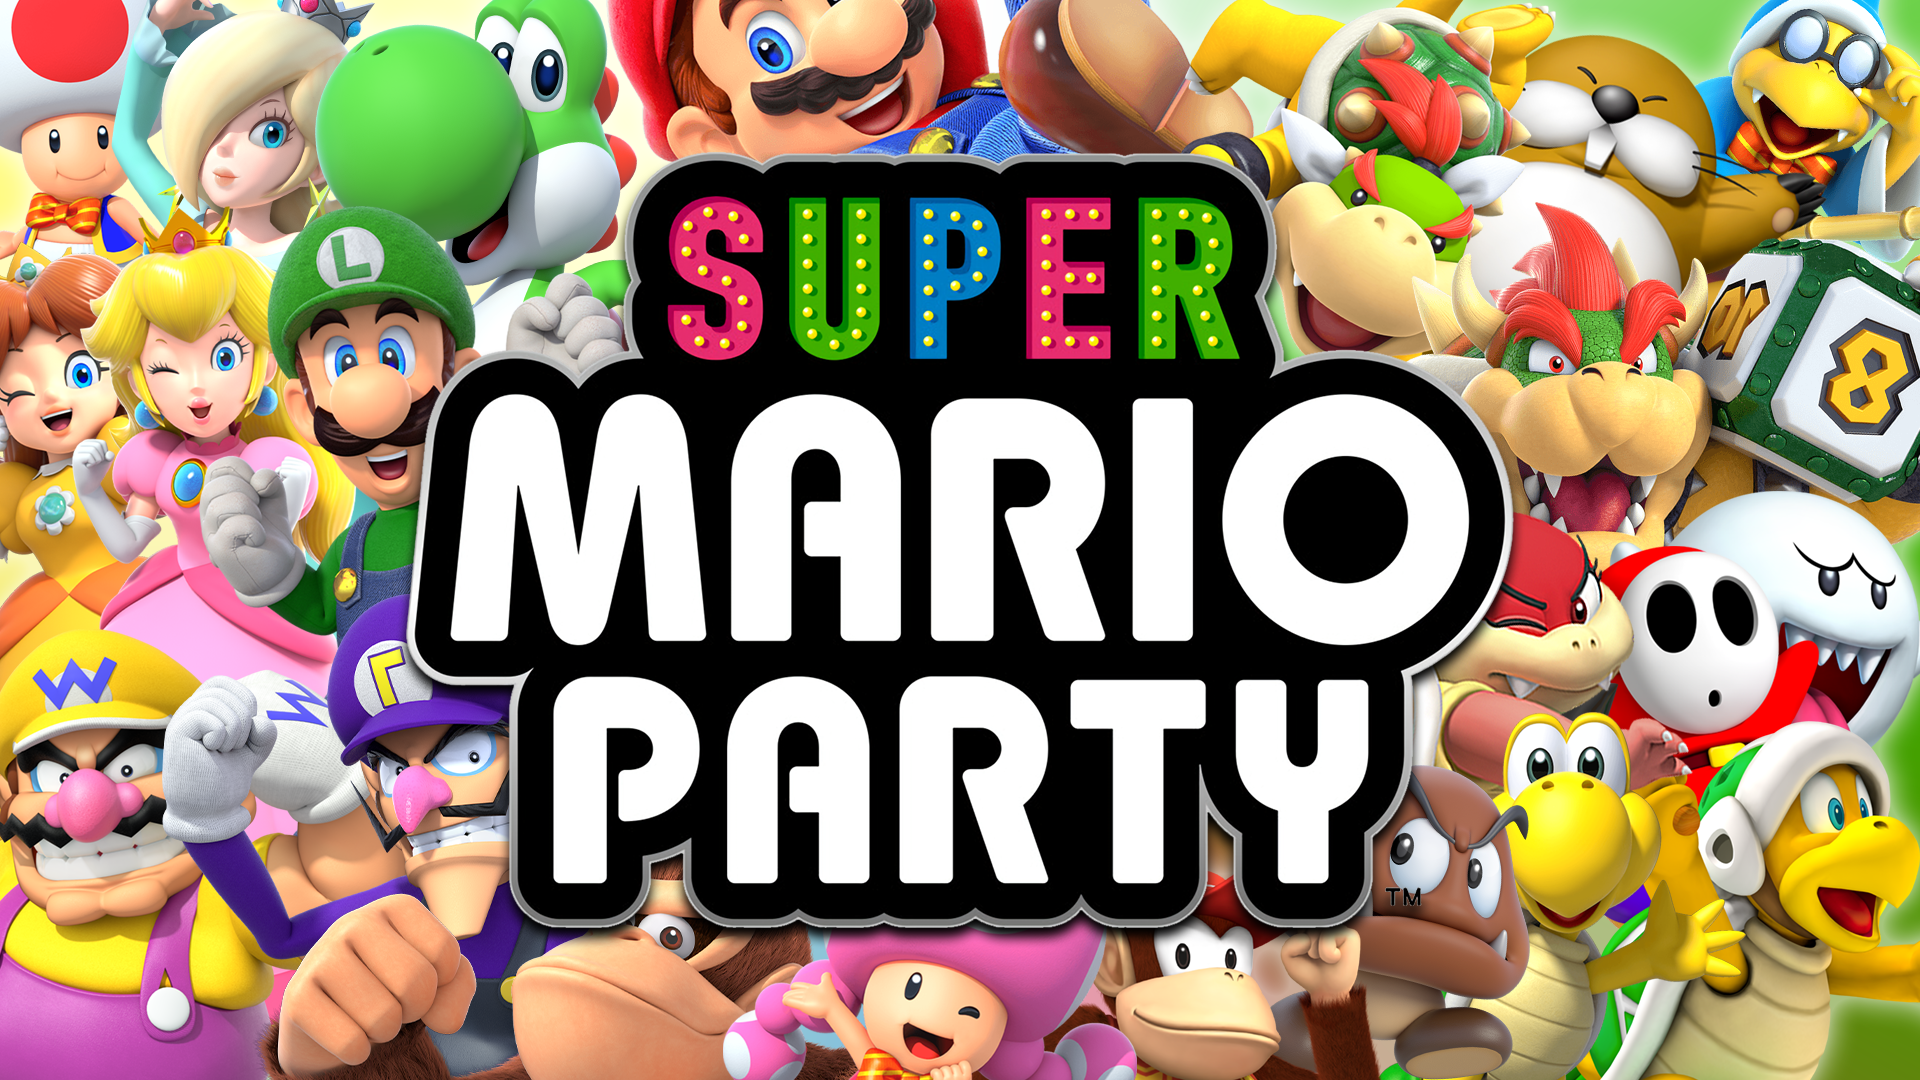 Mario Party Background